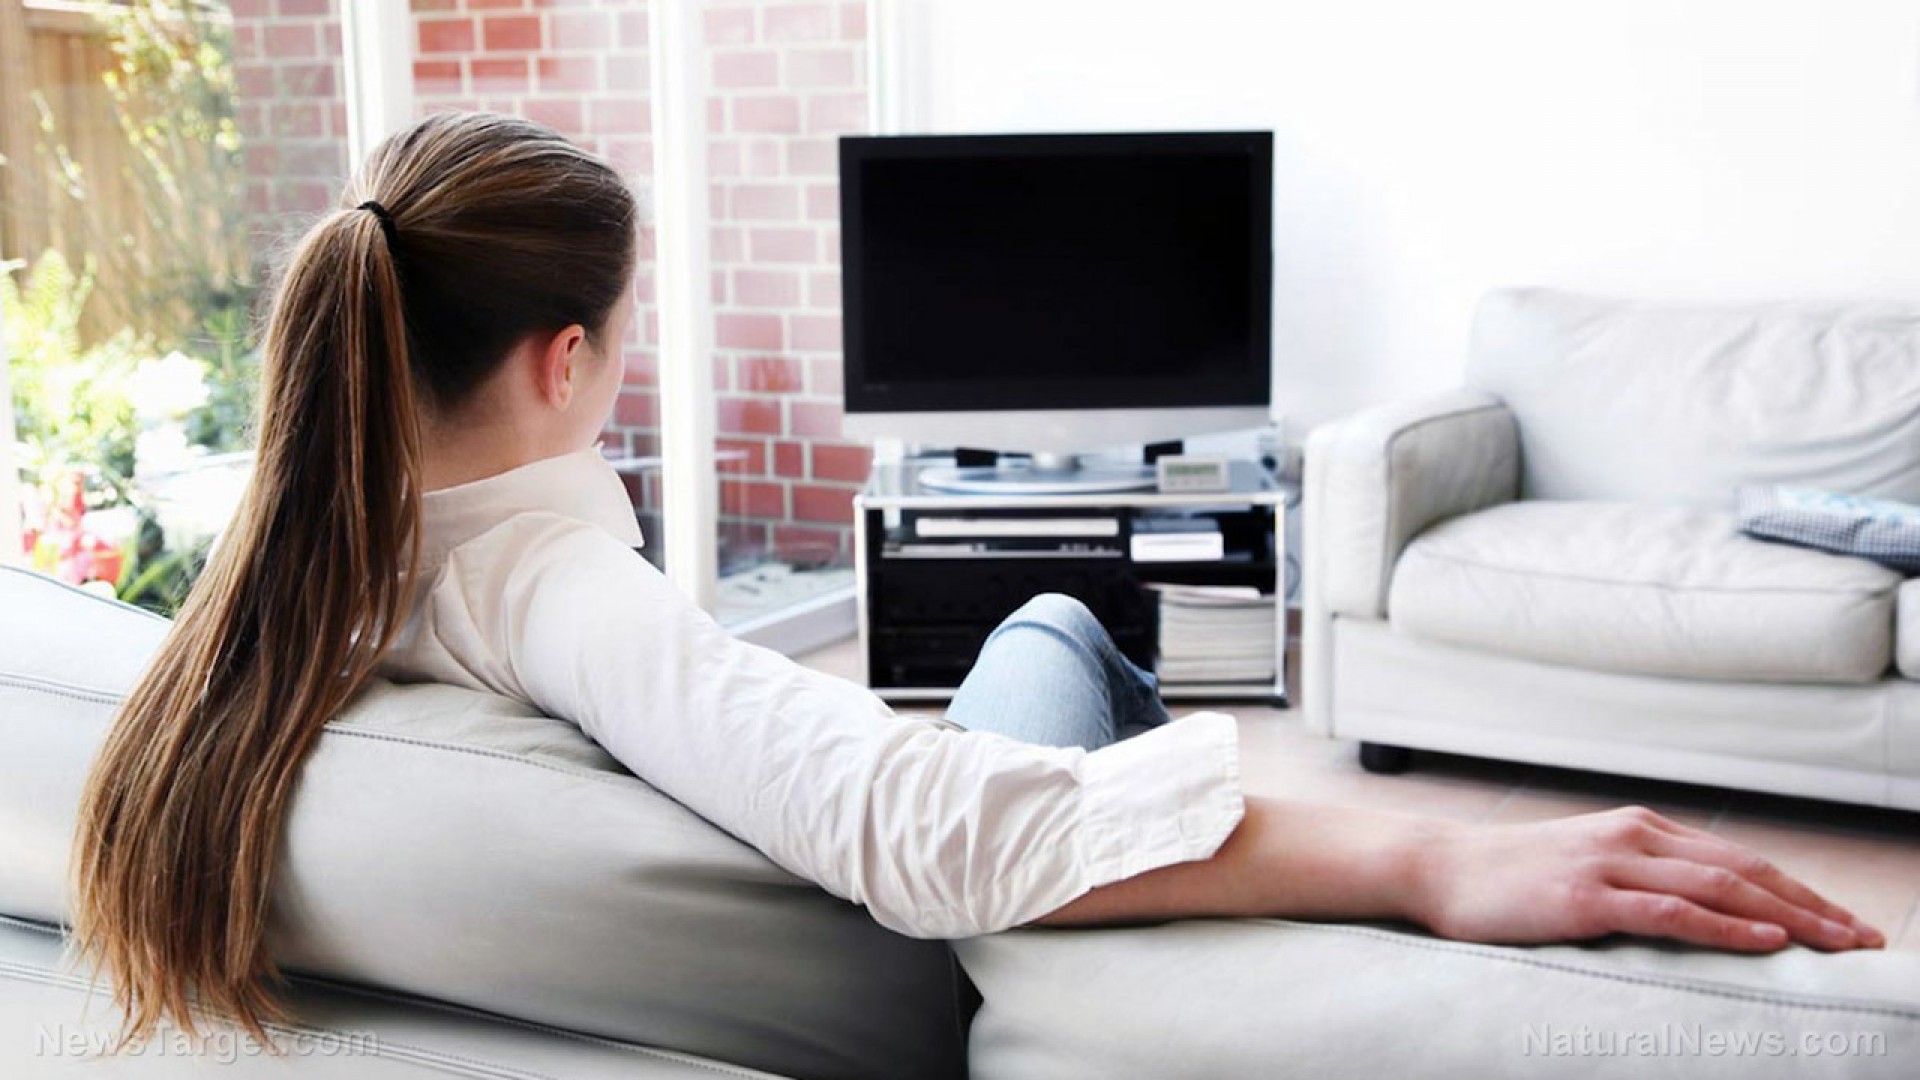 Телевизор читает видео. Женщина у телевизора. Женщина смотрит телевизор. Женщина перед телевизором. Человек перед телевизором.